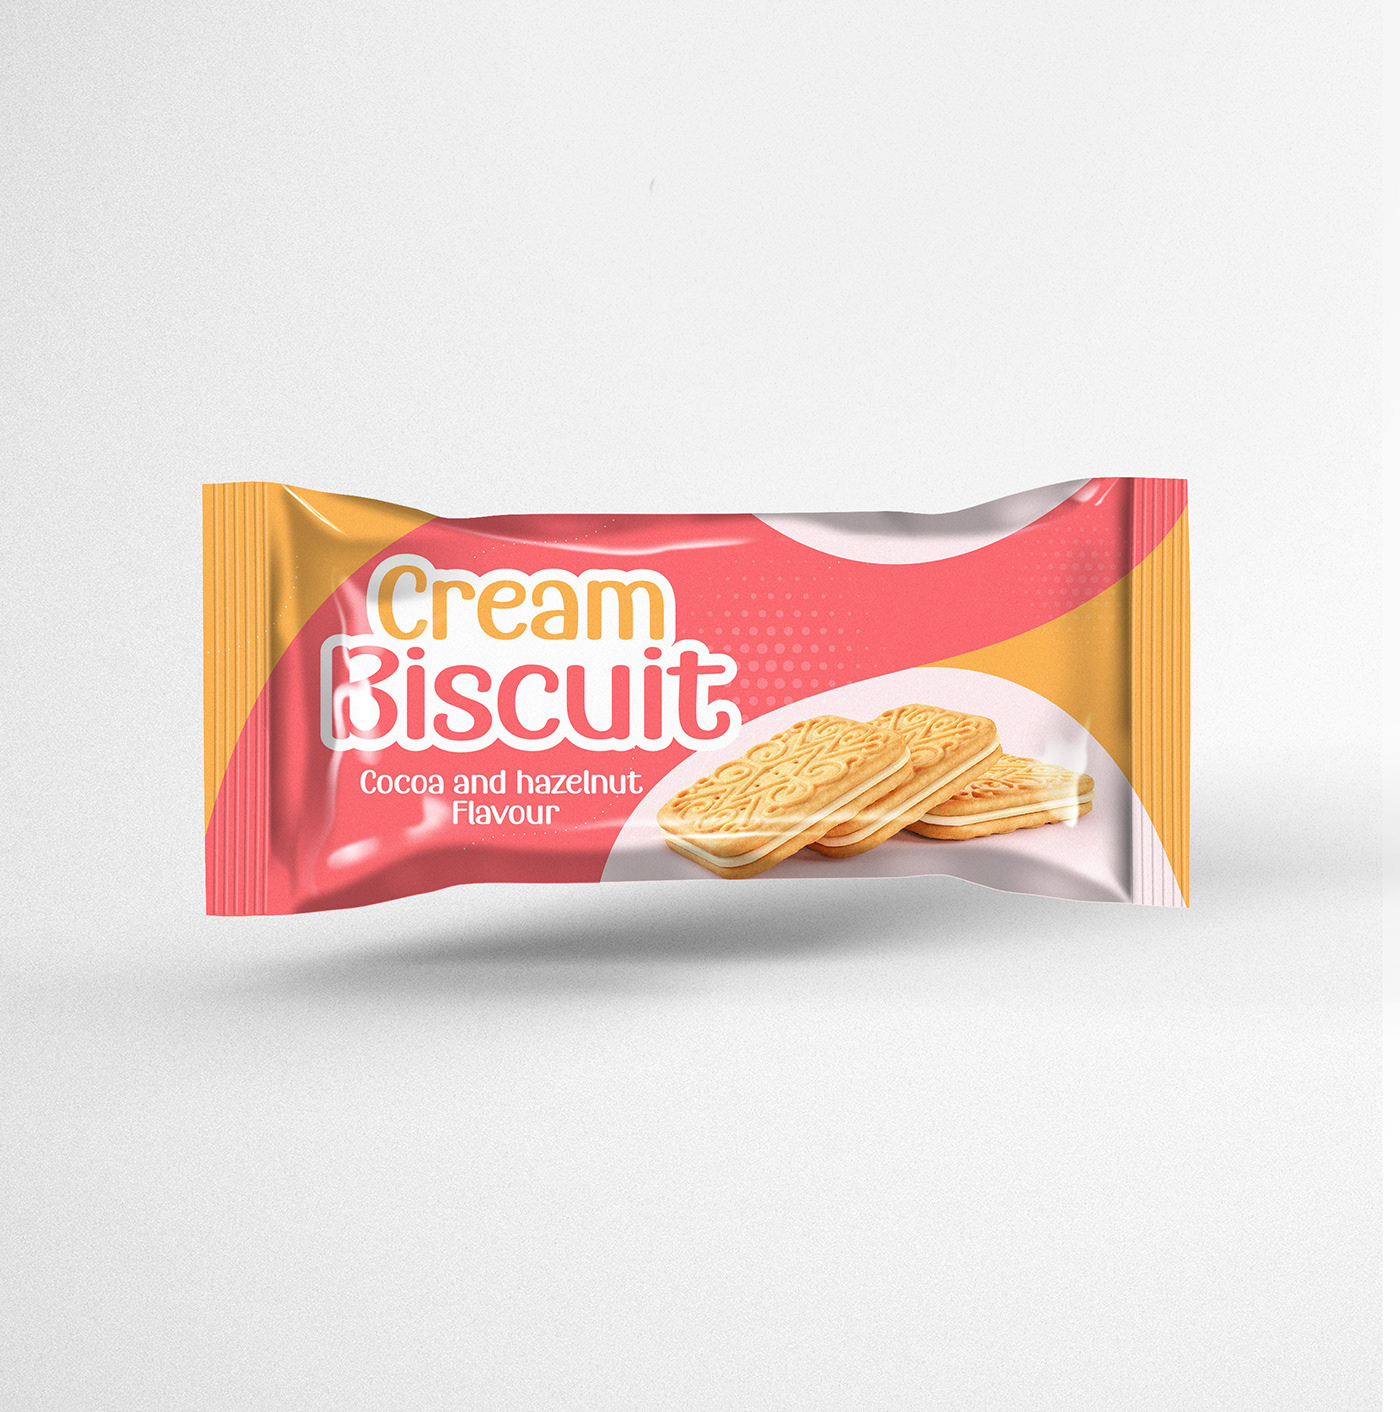 biscuit Packaging packaging design package box design label design product packaging CHOCO BISCUITS Cream biscuit